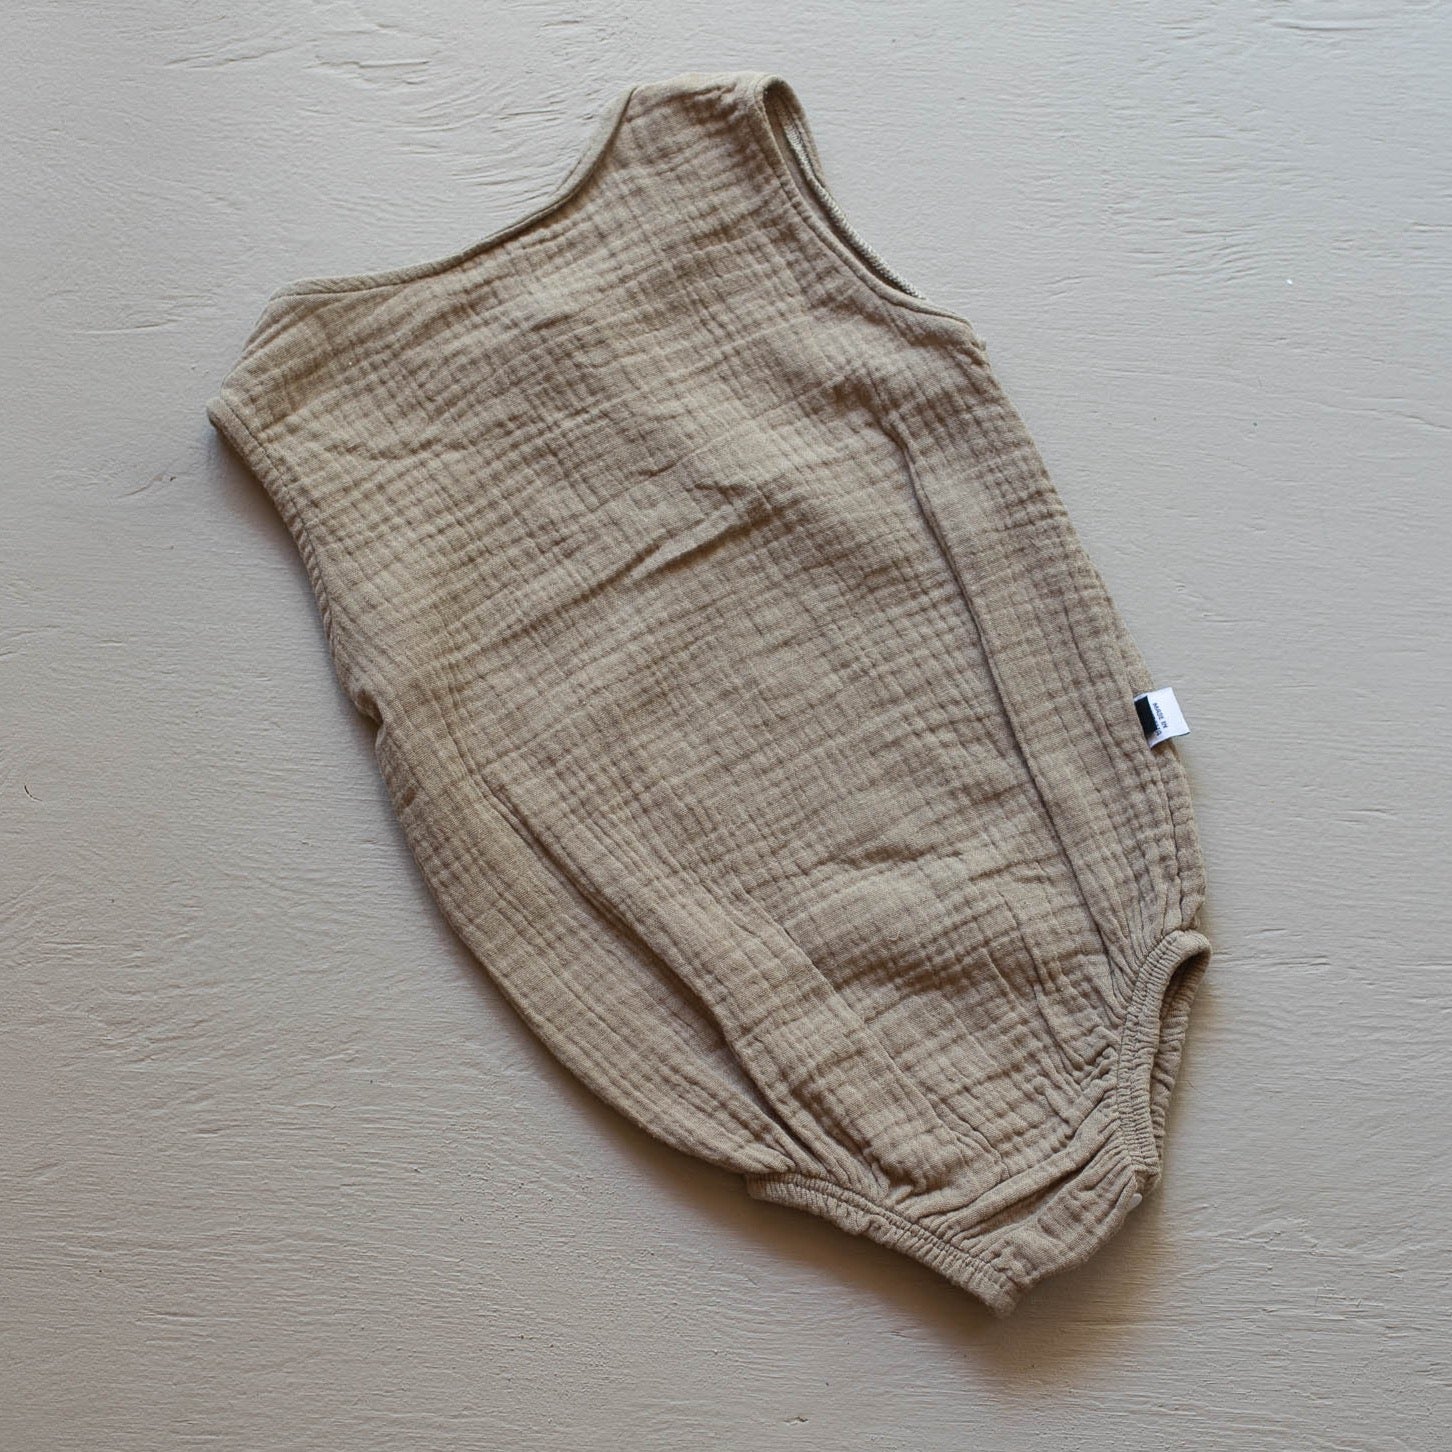 Neutral Baby romper mocha onesie jumpsuit organic cotton Australian made